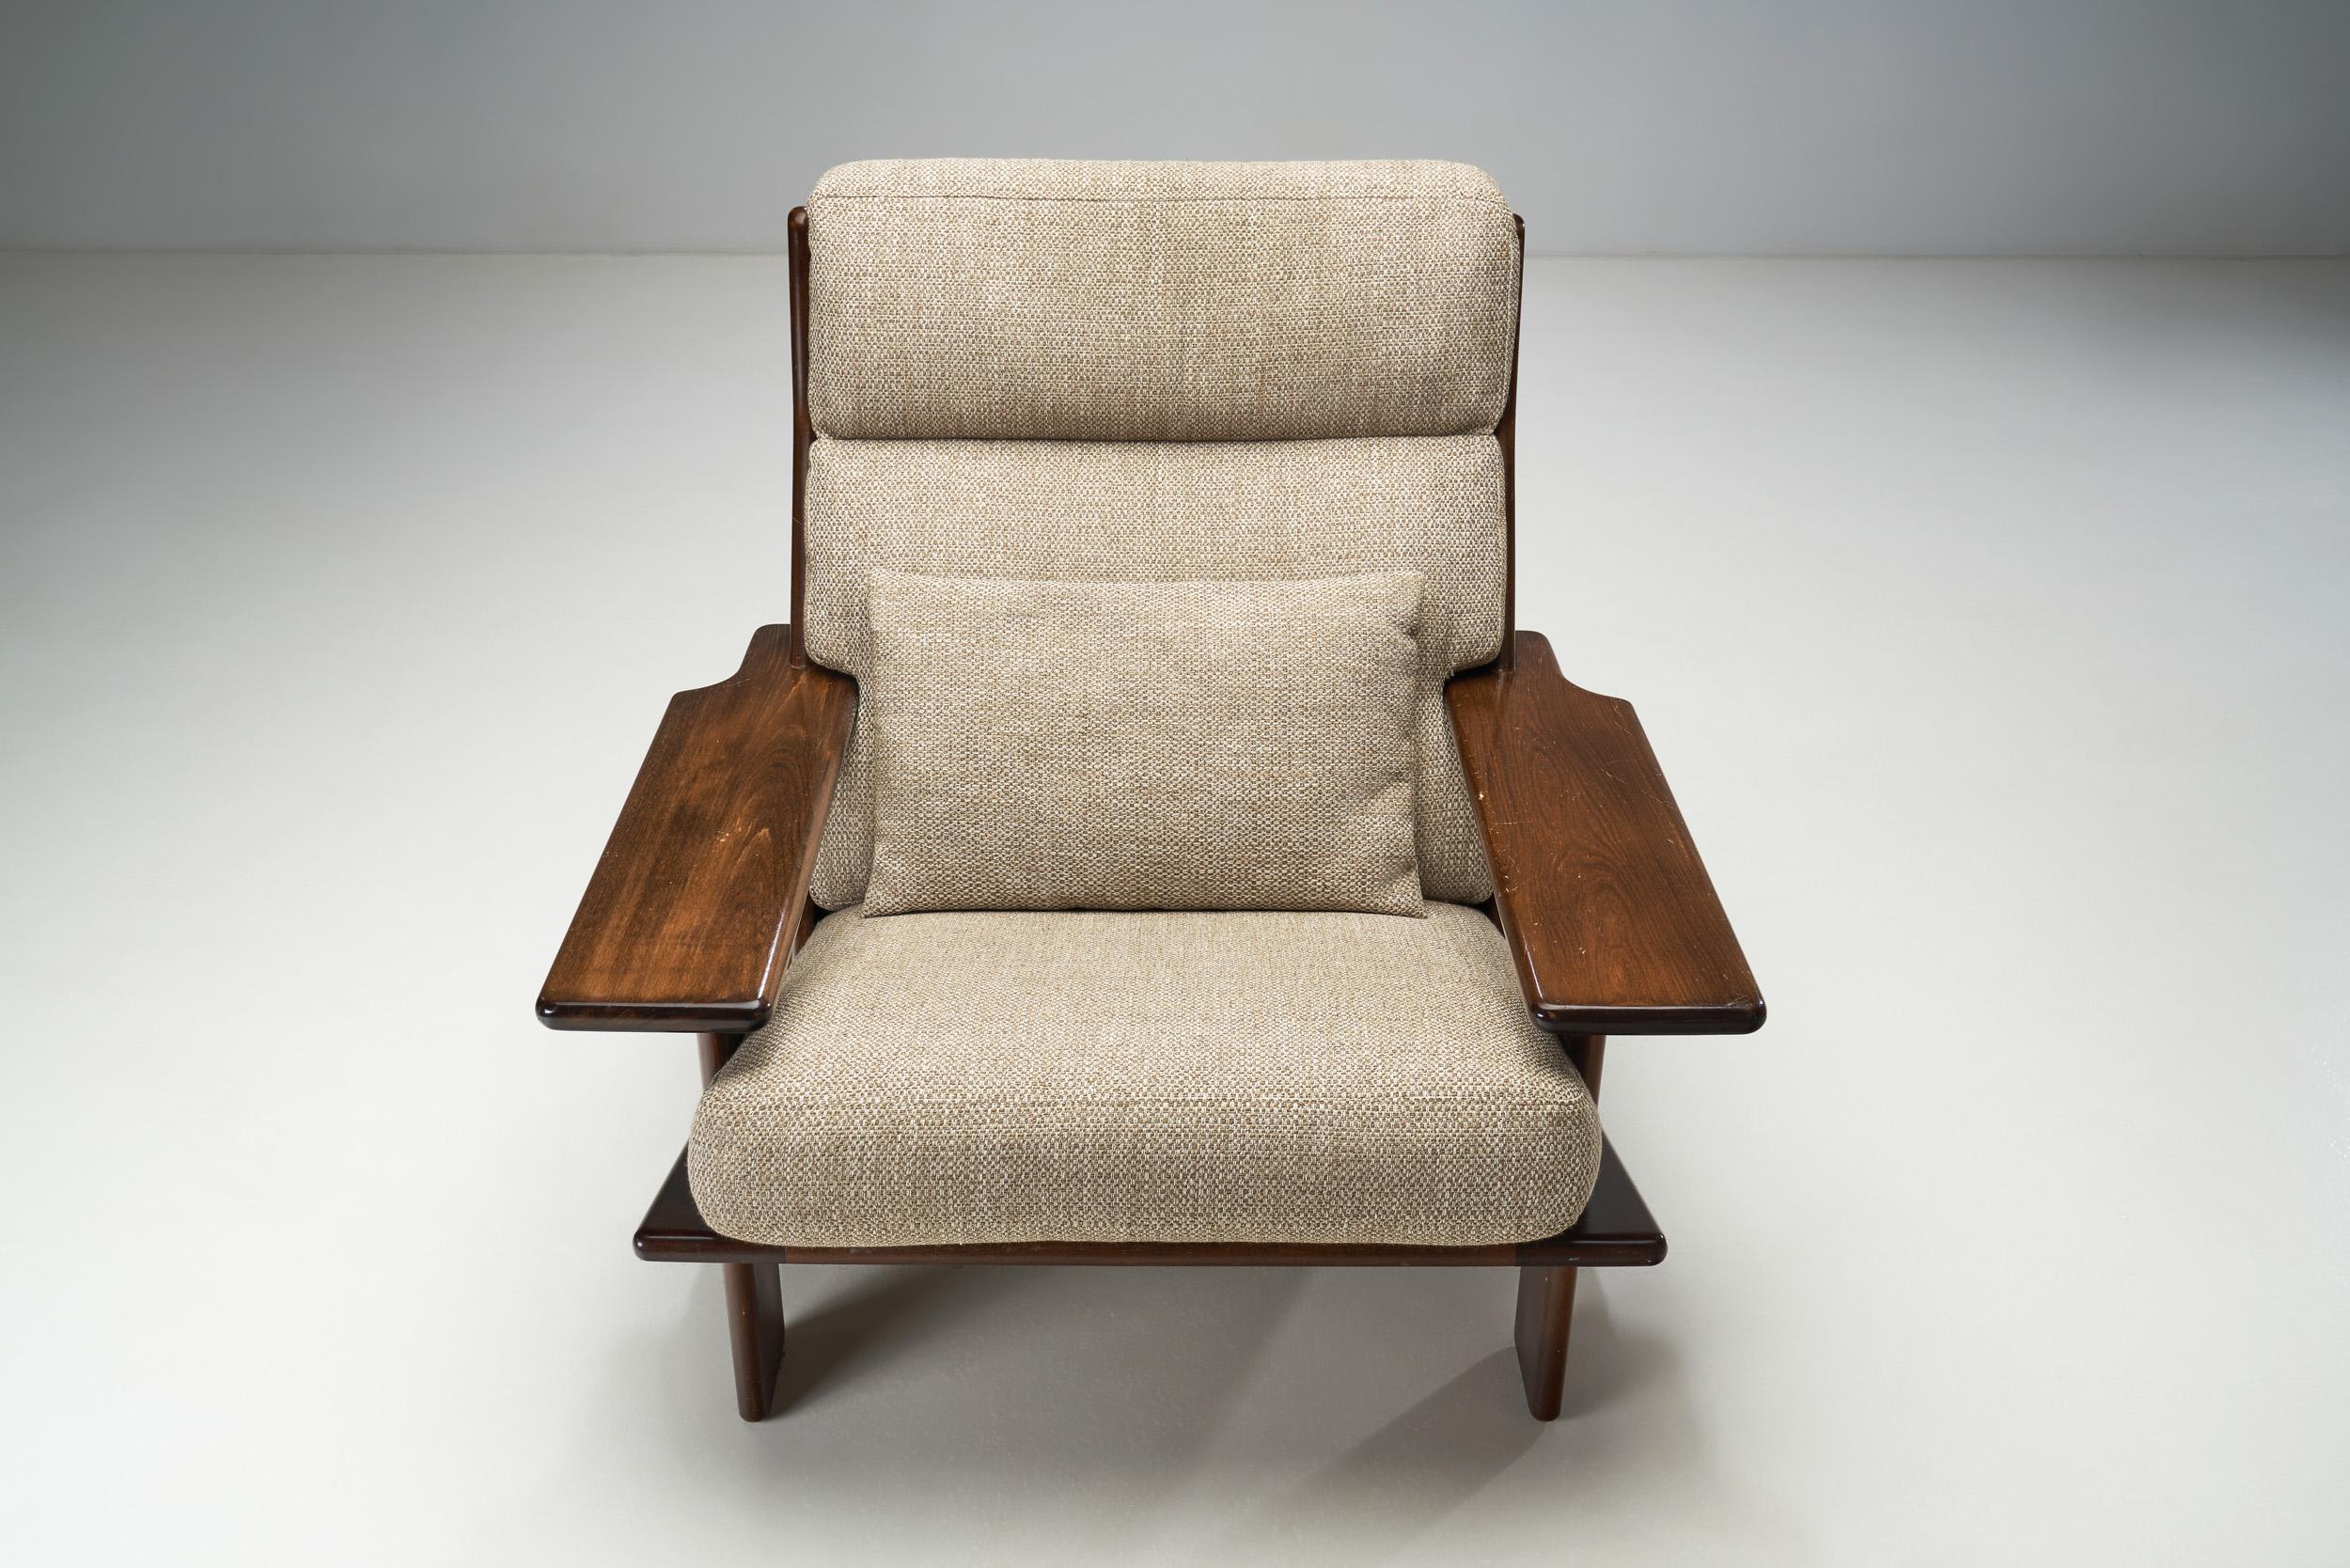 Finnish “Pele” Lounge Chair by Esko Pajamies for Lepokalusto, Finland, 1970s